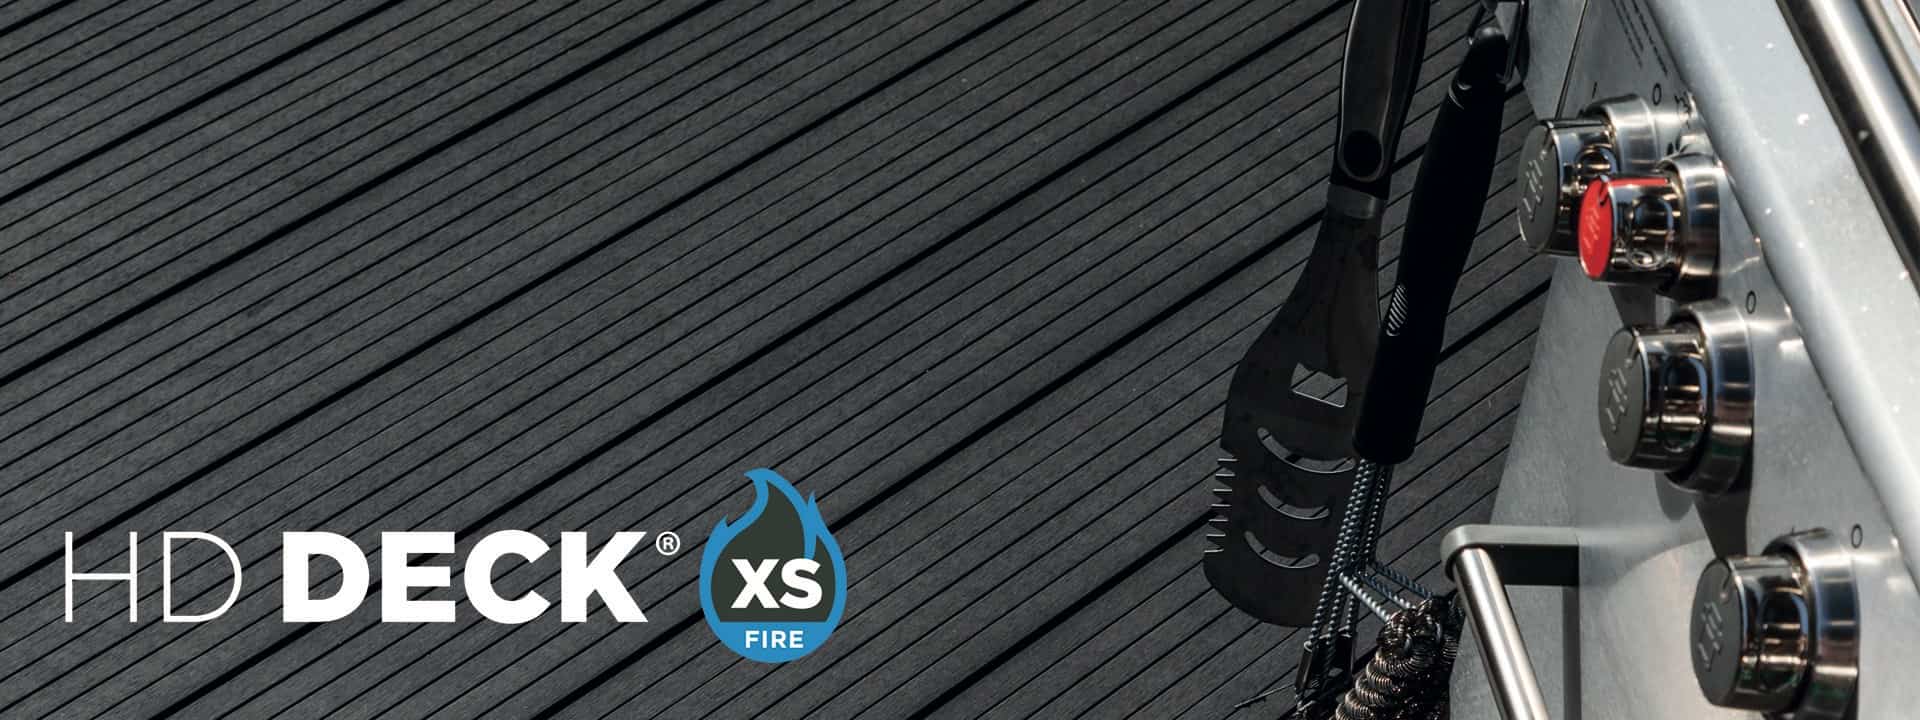 HD Deck XS Fire